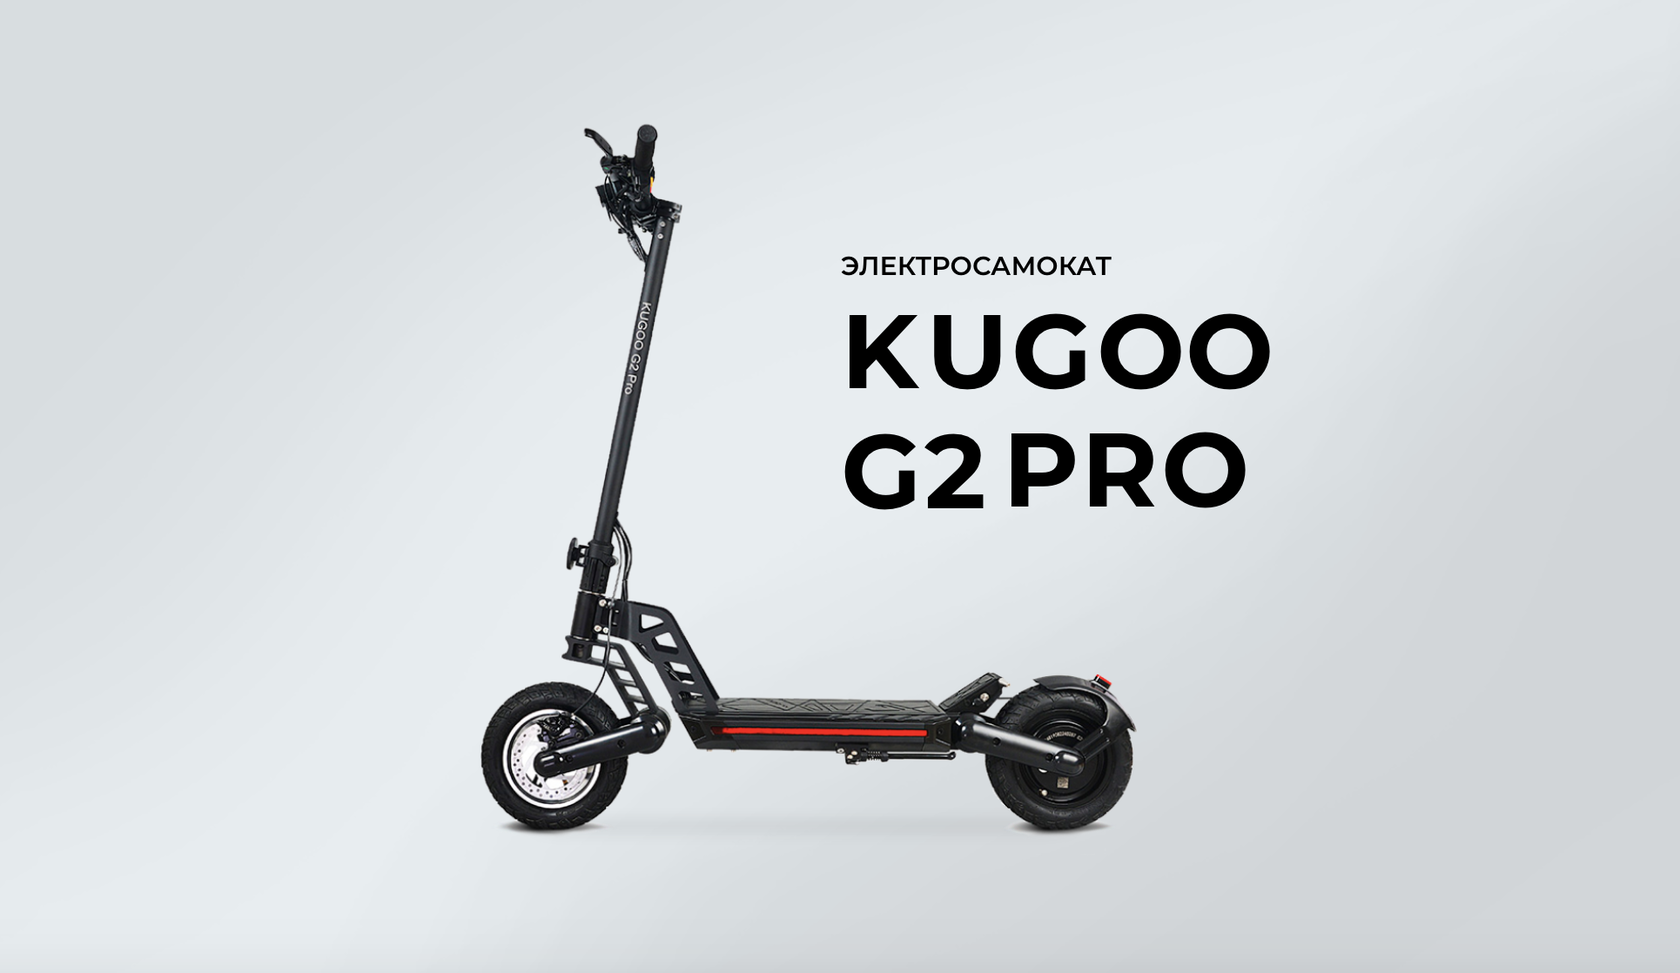 Kugoo g2 pro характеристики. Электросамокат Kugoo g2. Электросамокат Kugoo g3 Pro. Электросамокат Kugoo c2 Pro. Электросамокат Kugoo g2-Pro черный.